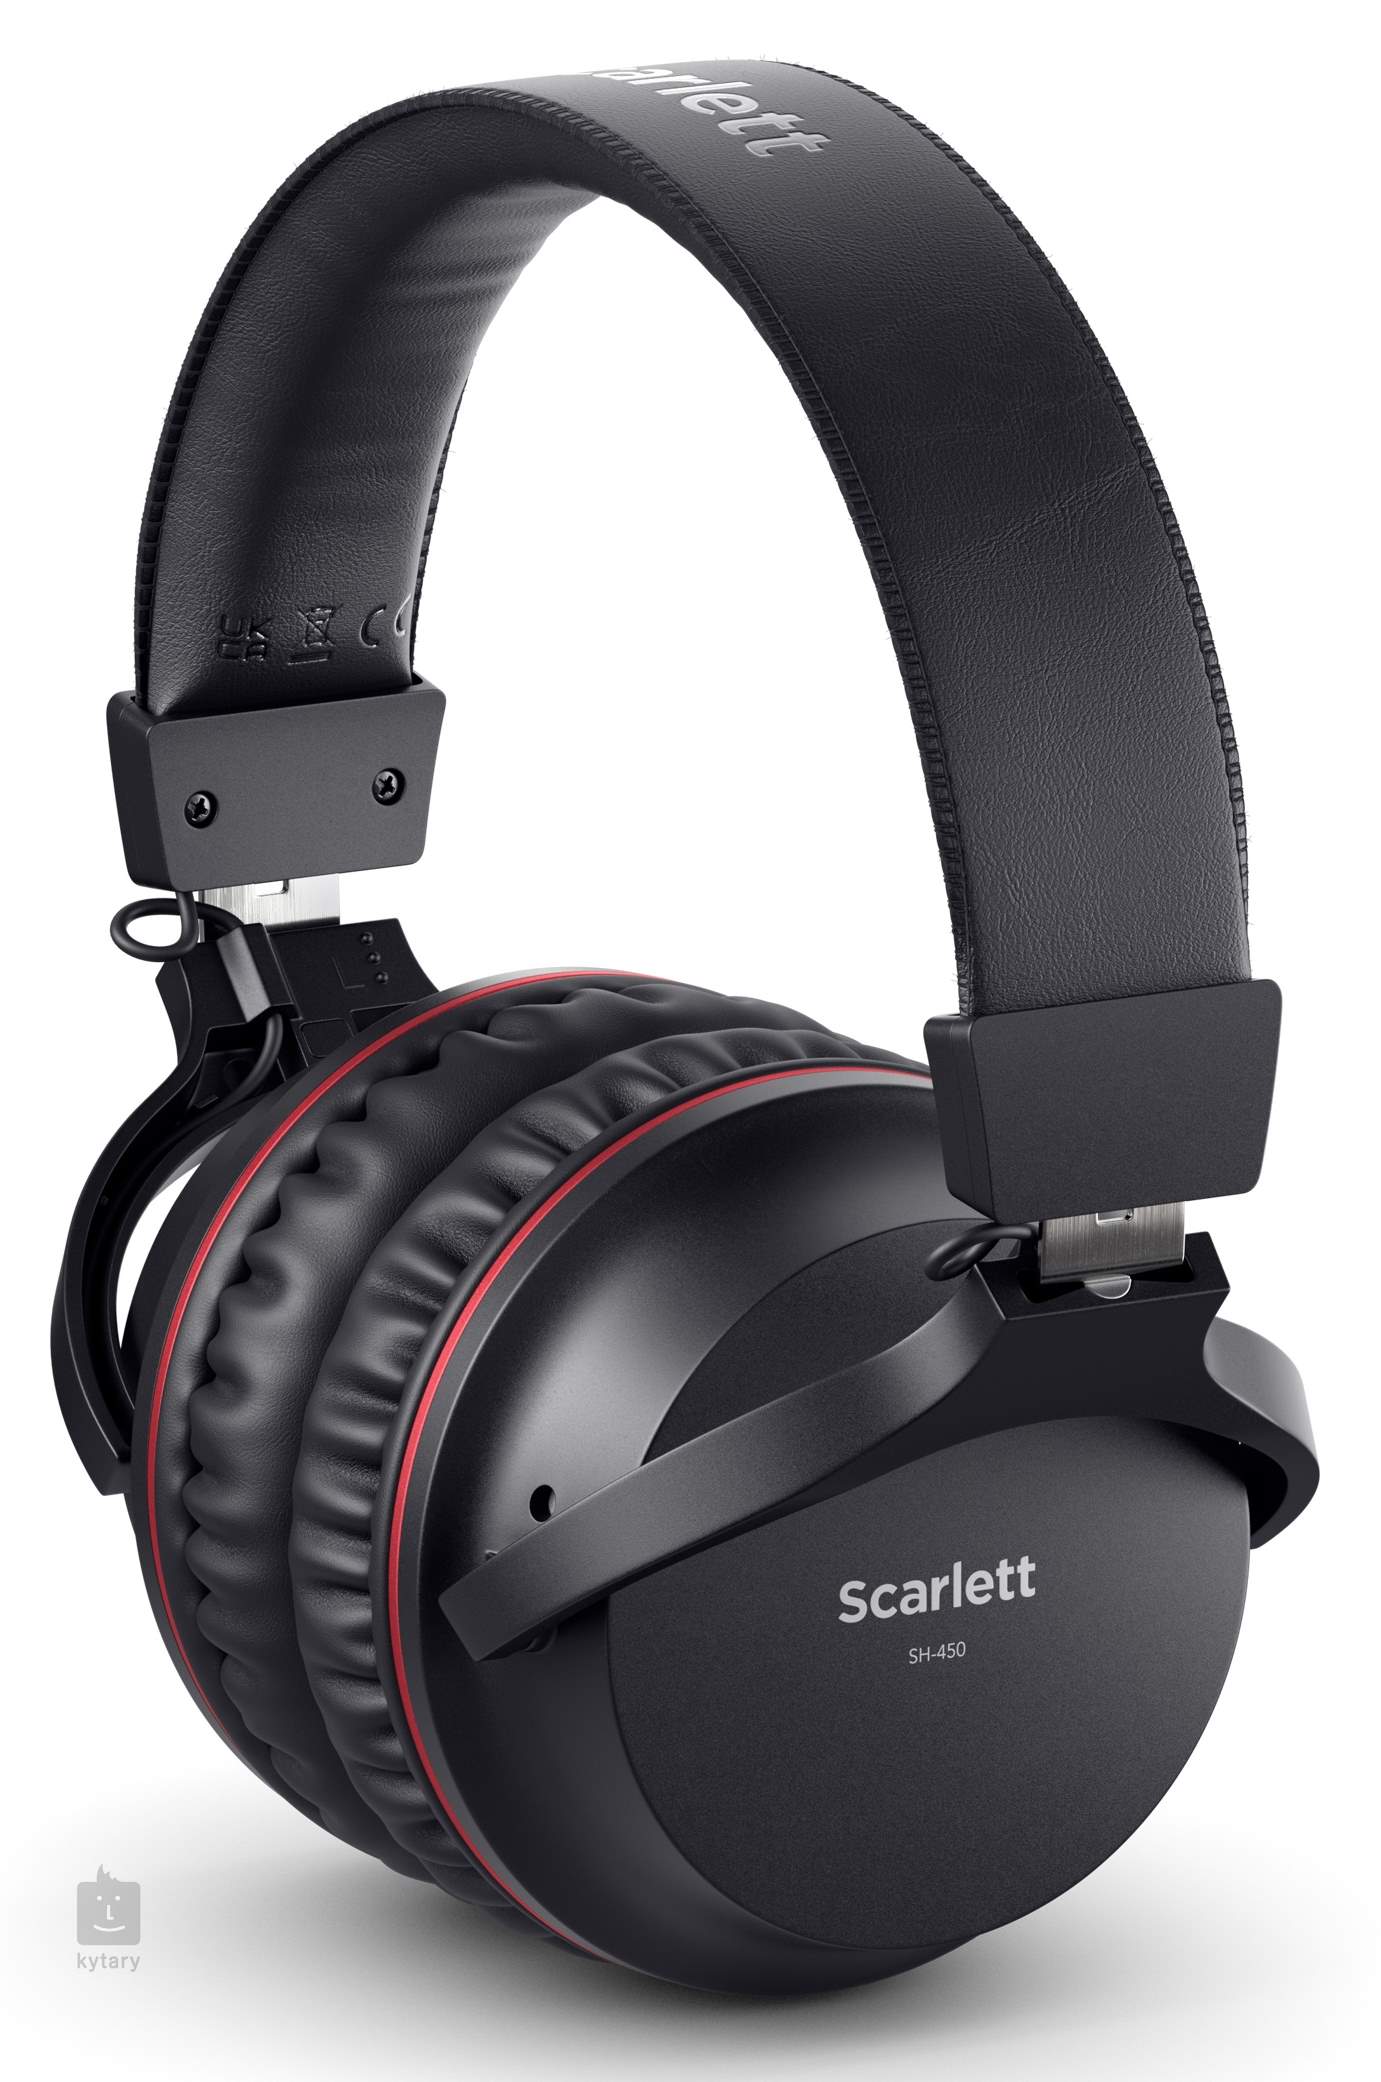 Meet the Focusrite Scarlett 4th Generation audio interfaces 